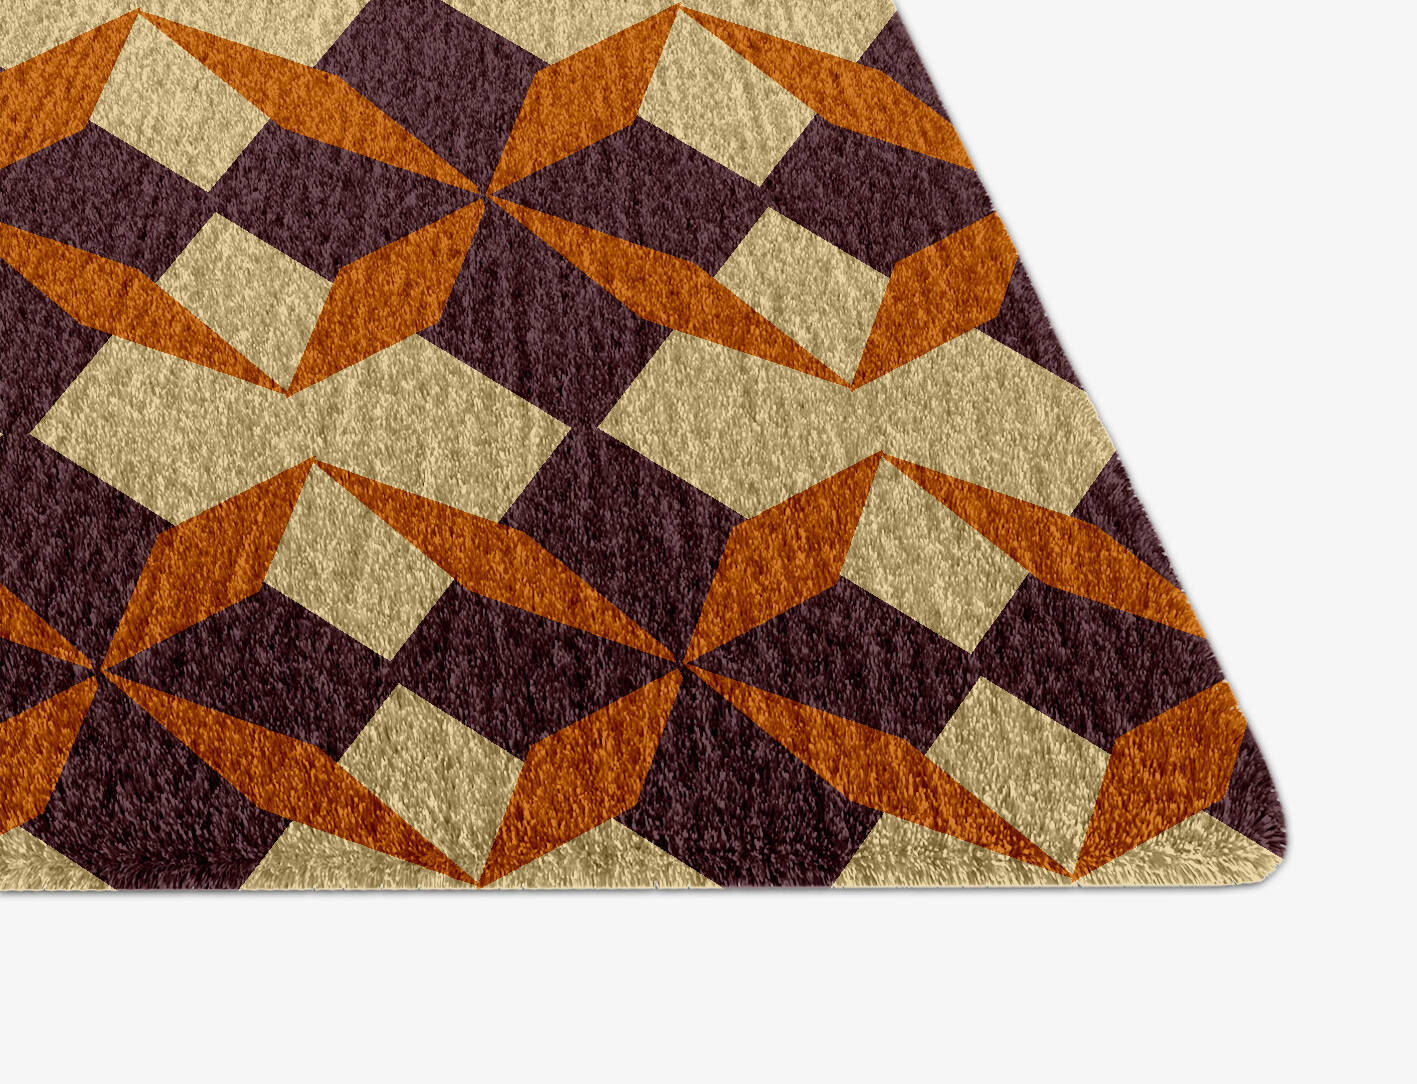 Arabesque Geometric Arch Hand Knotted Tibetan Wool Custom Rug by Rug Artisan